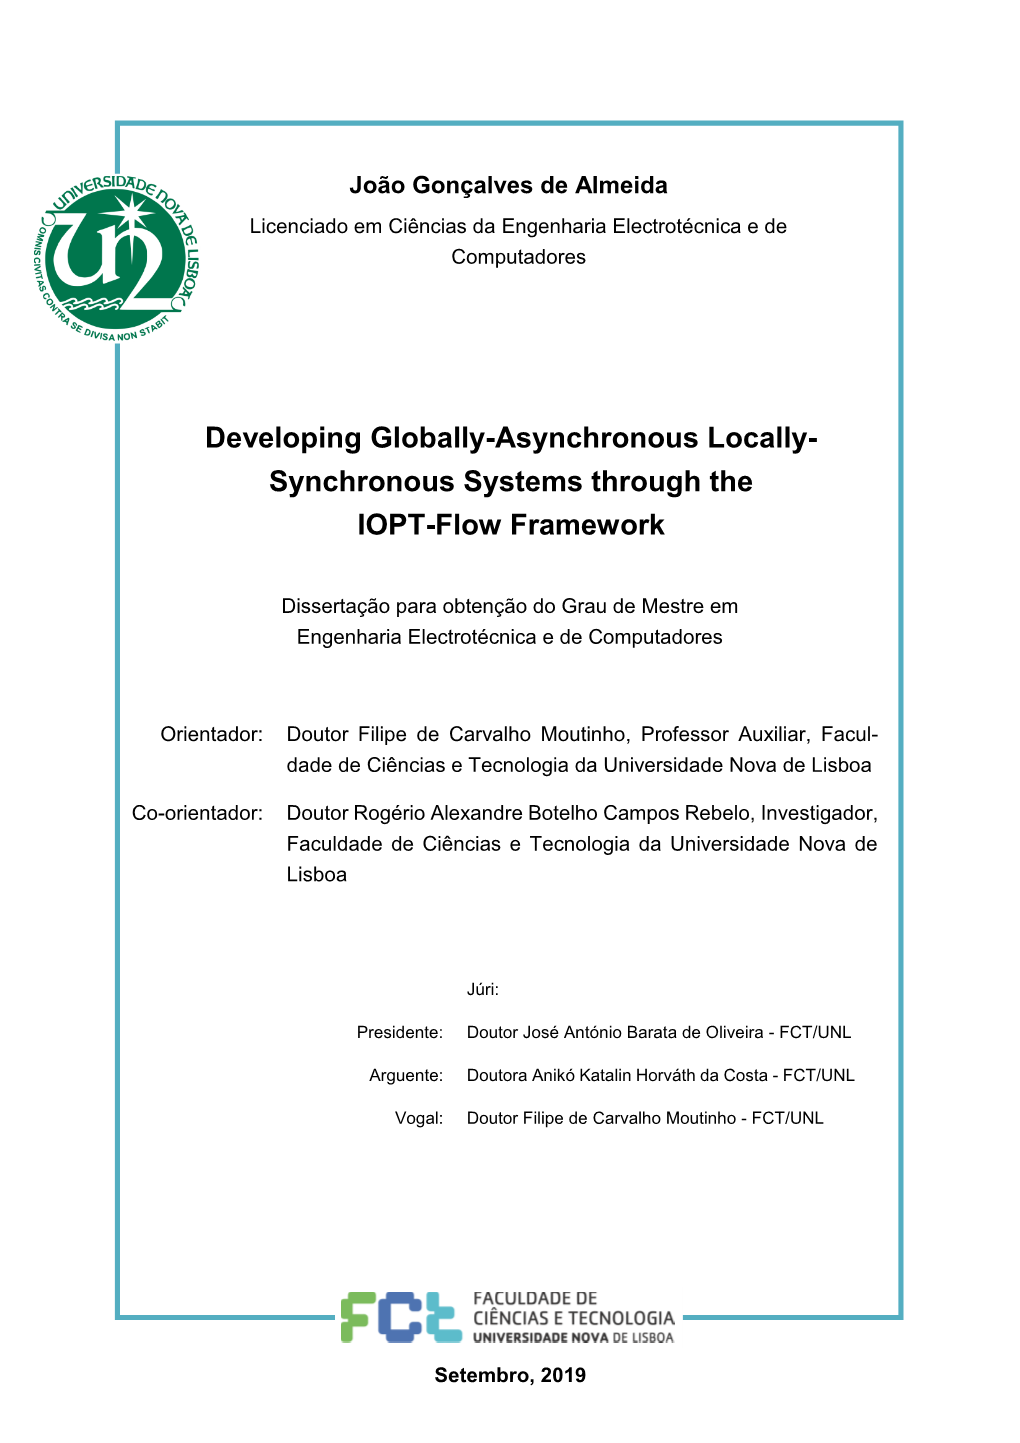 Synchronous Systems Through the IOPT-Flow Framework